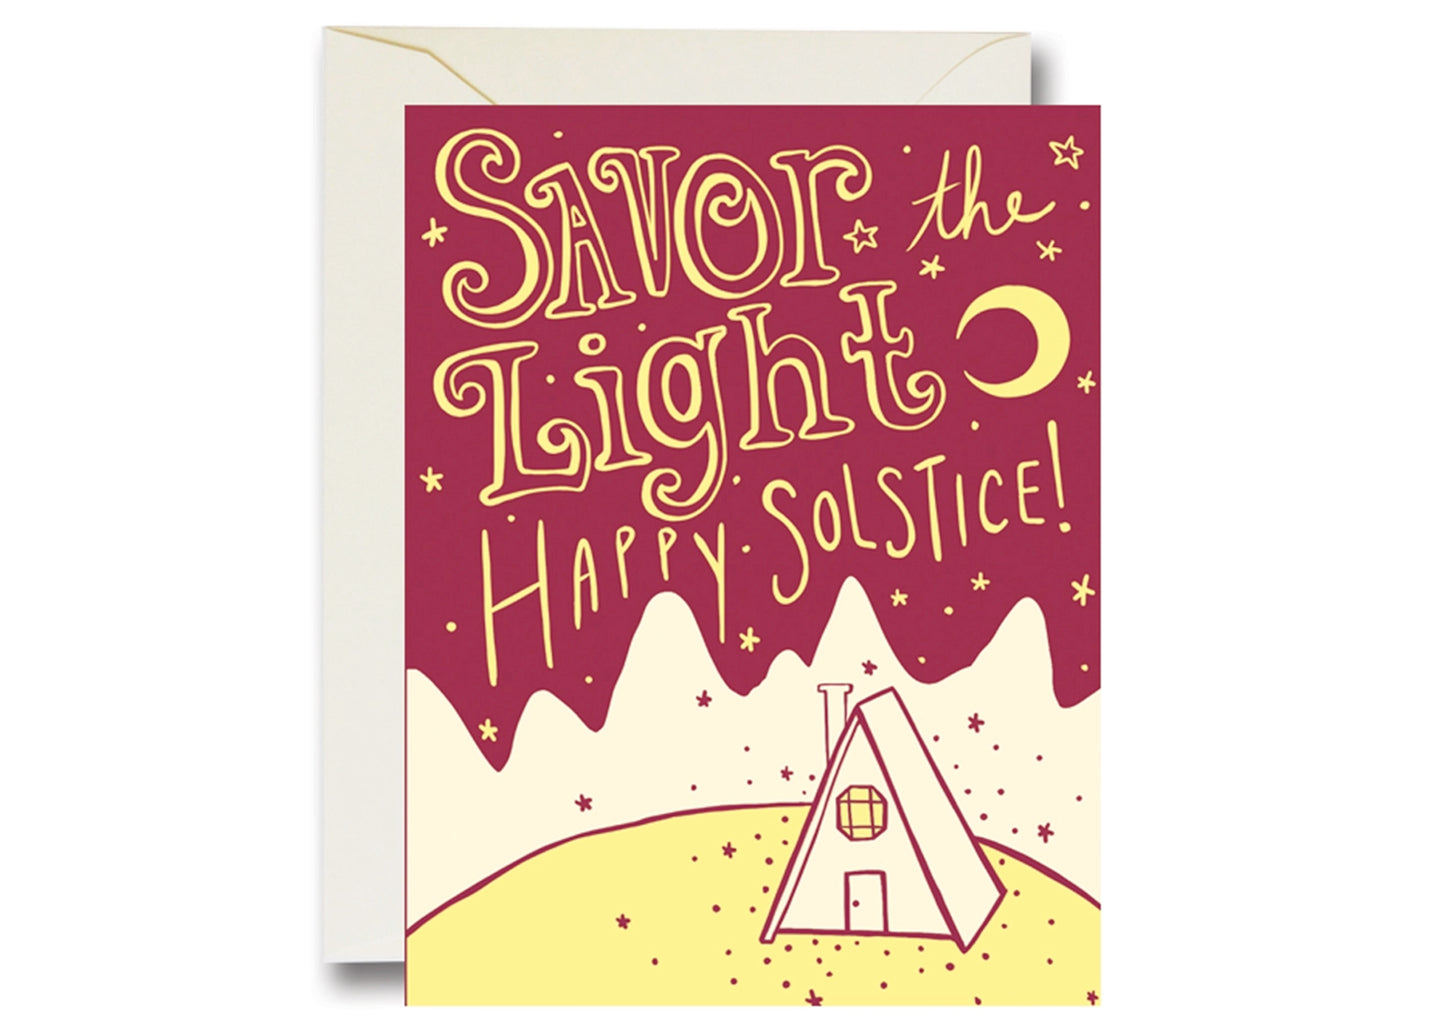 Savor The Light Solstice Card